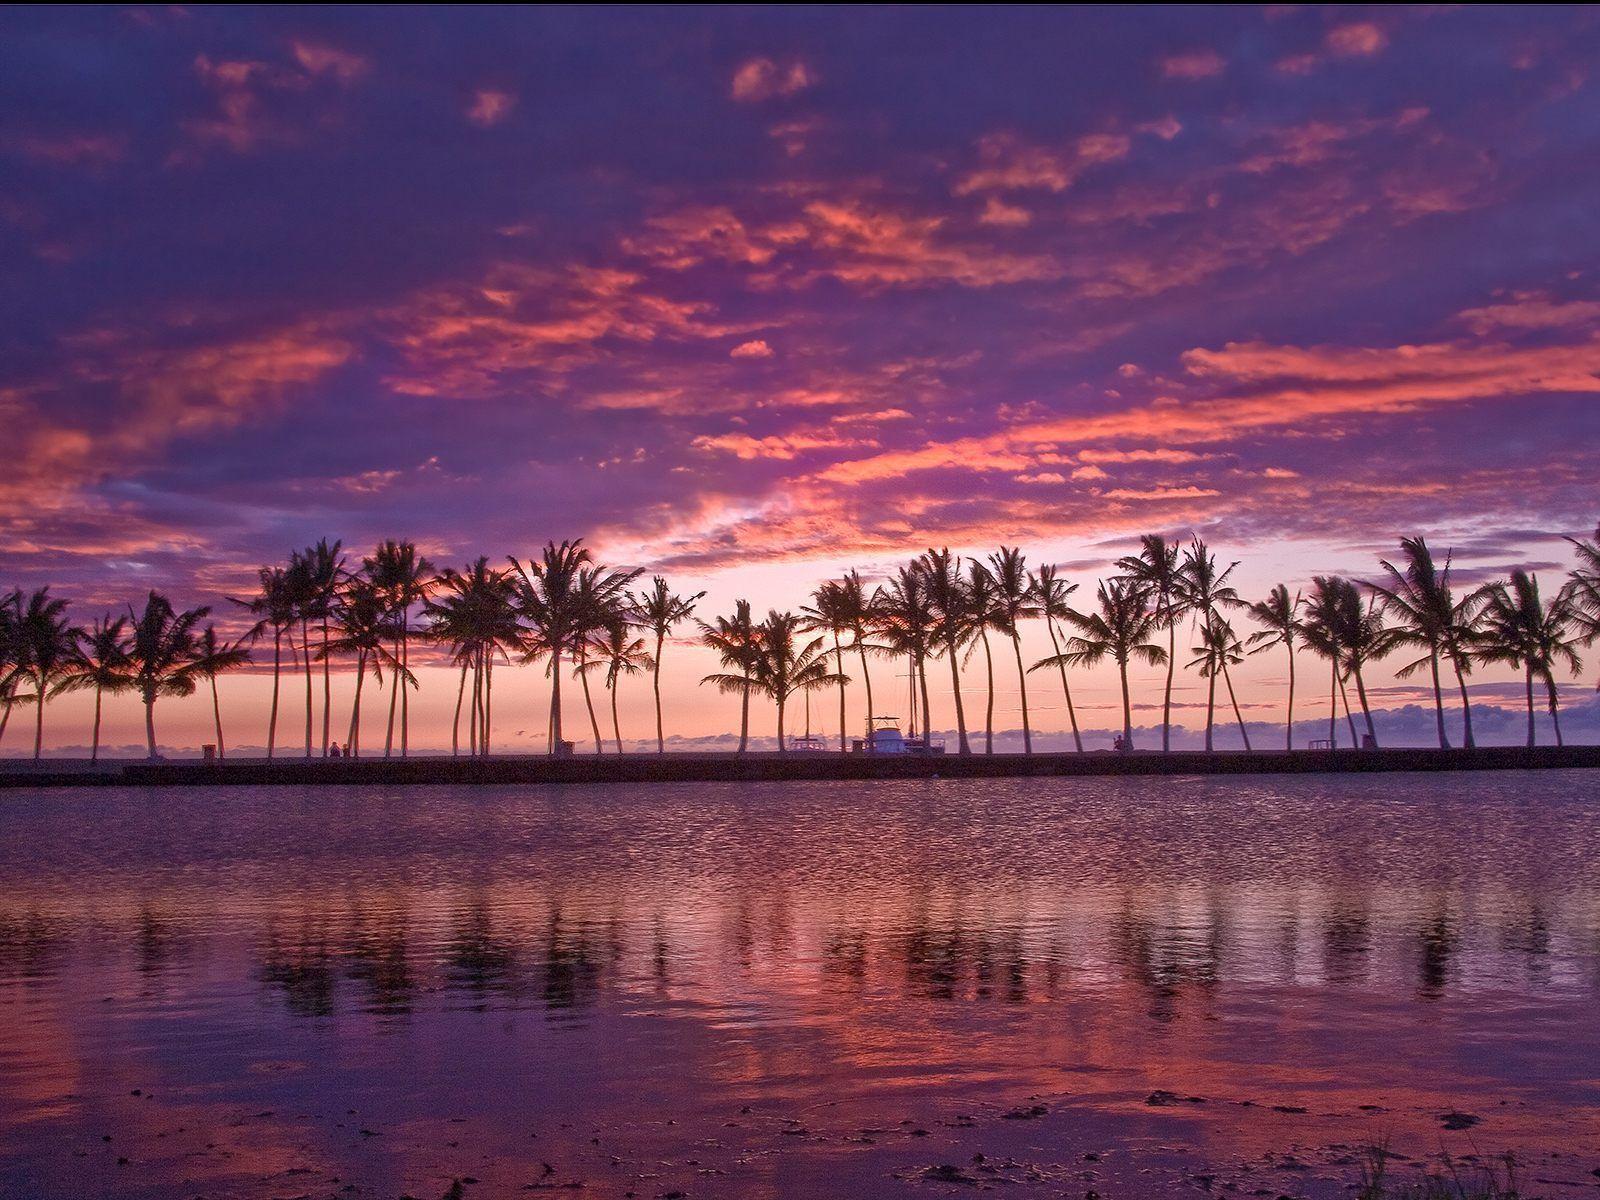 kauai hawaii reflection images